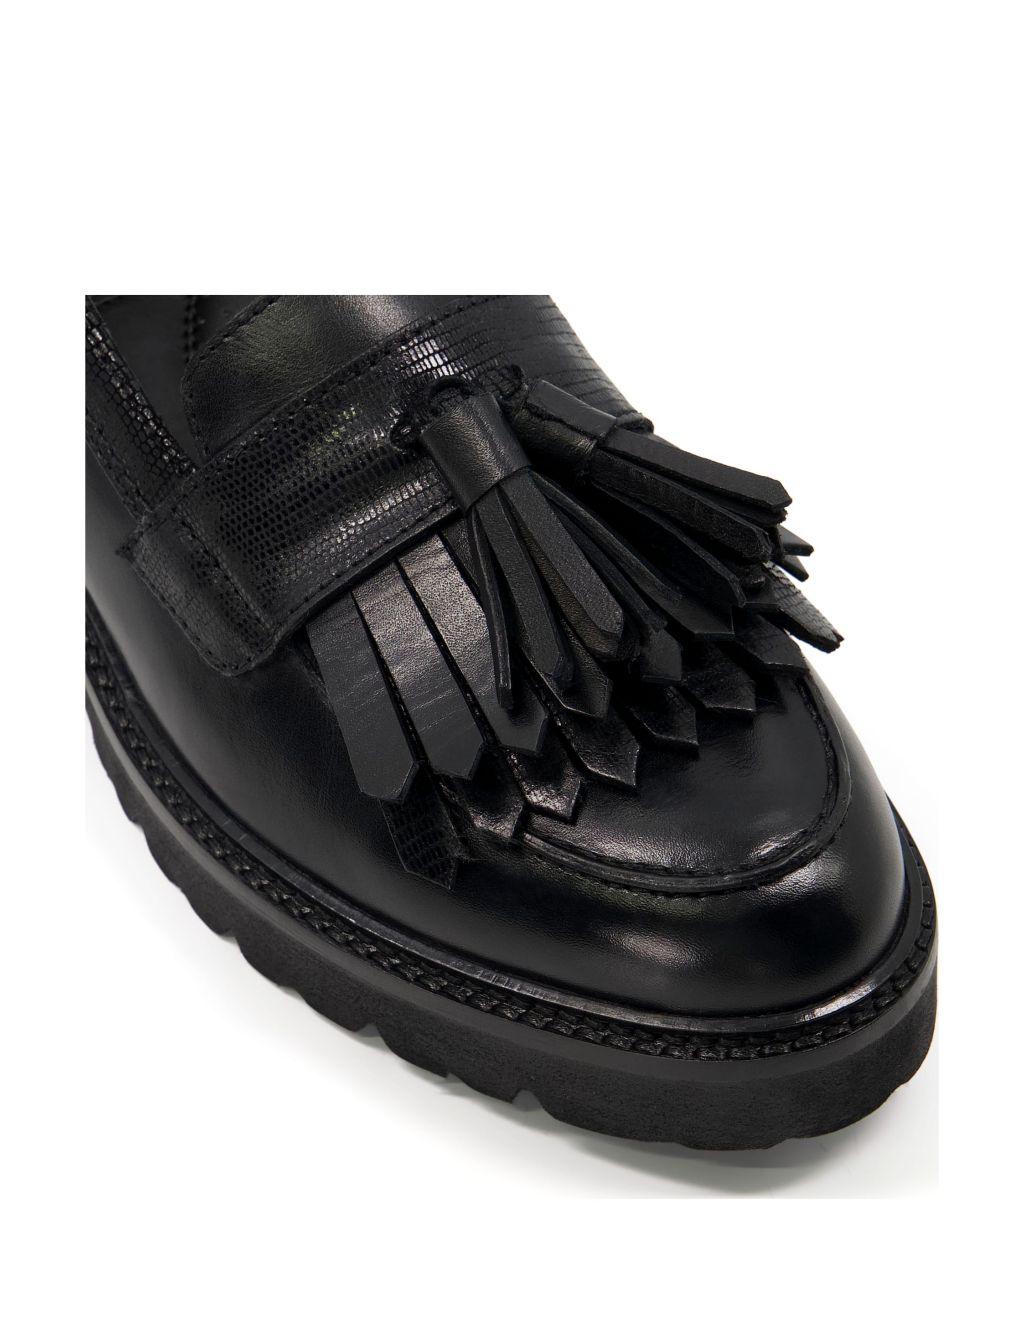 Leather Tassel Flat Loafers image 3